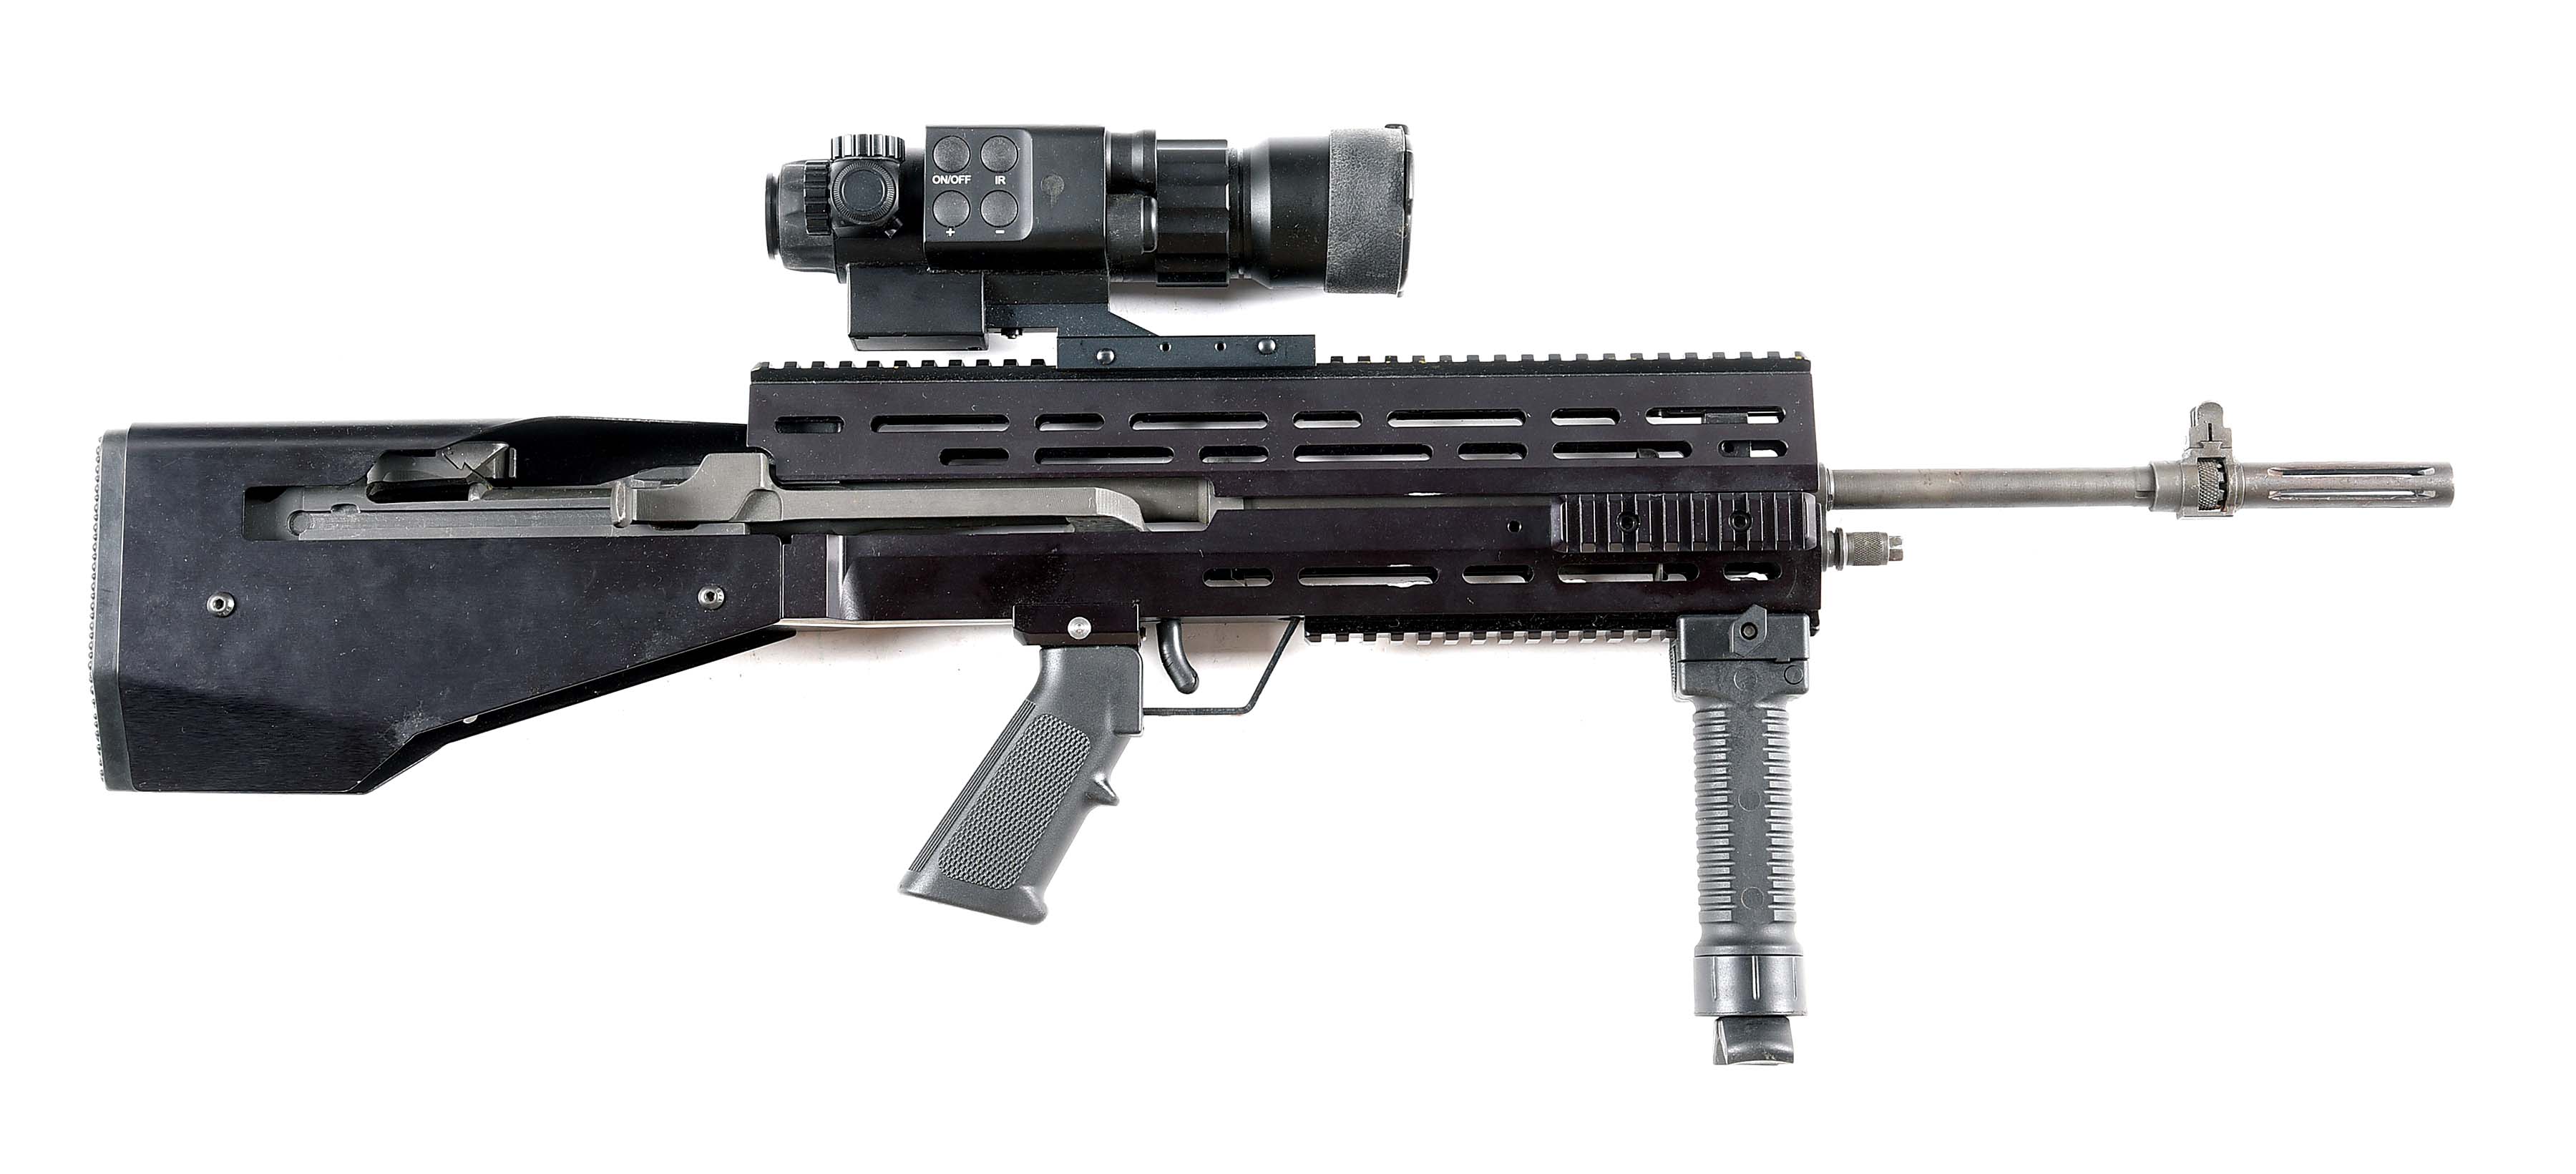 M) polytech M14-S .308 semi-automatic rifle in juggernaut tactical rogue bu...